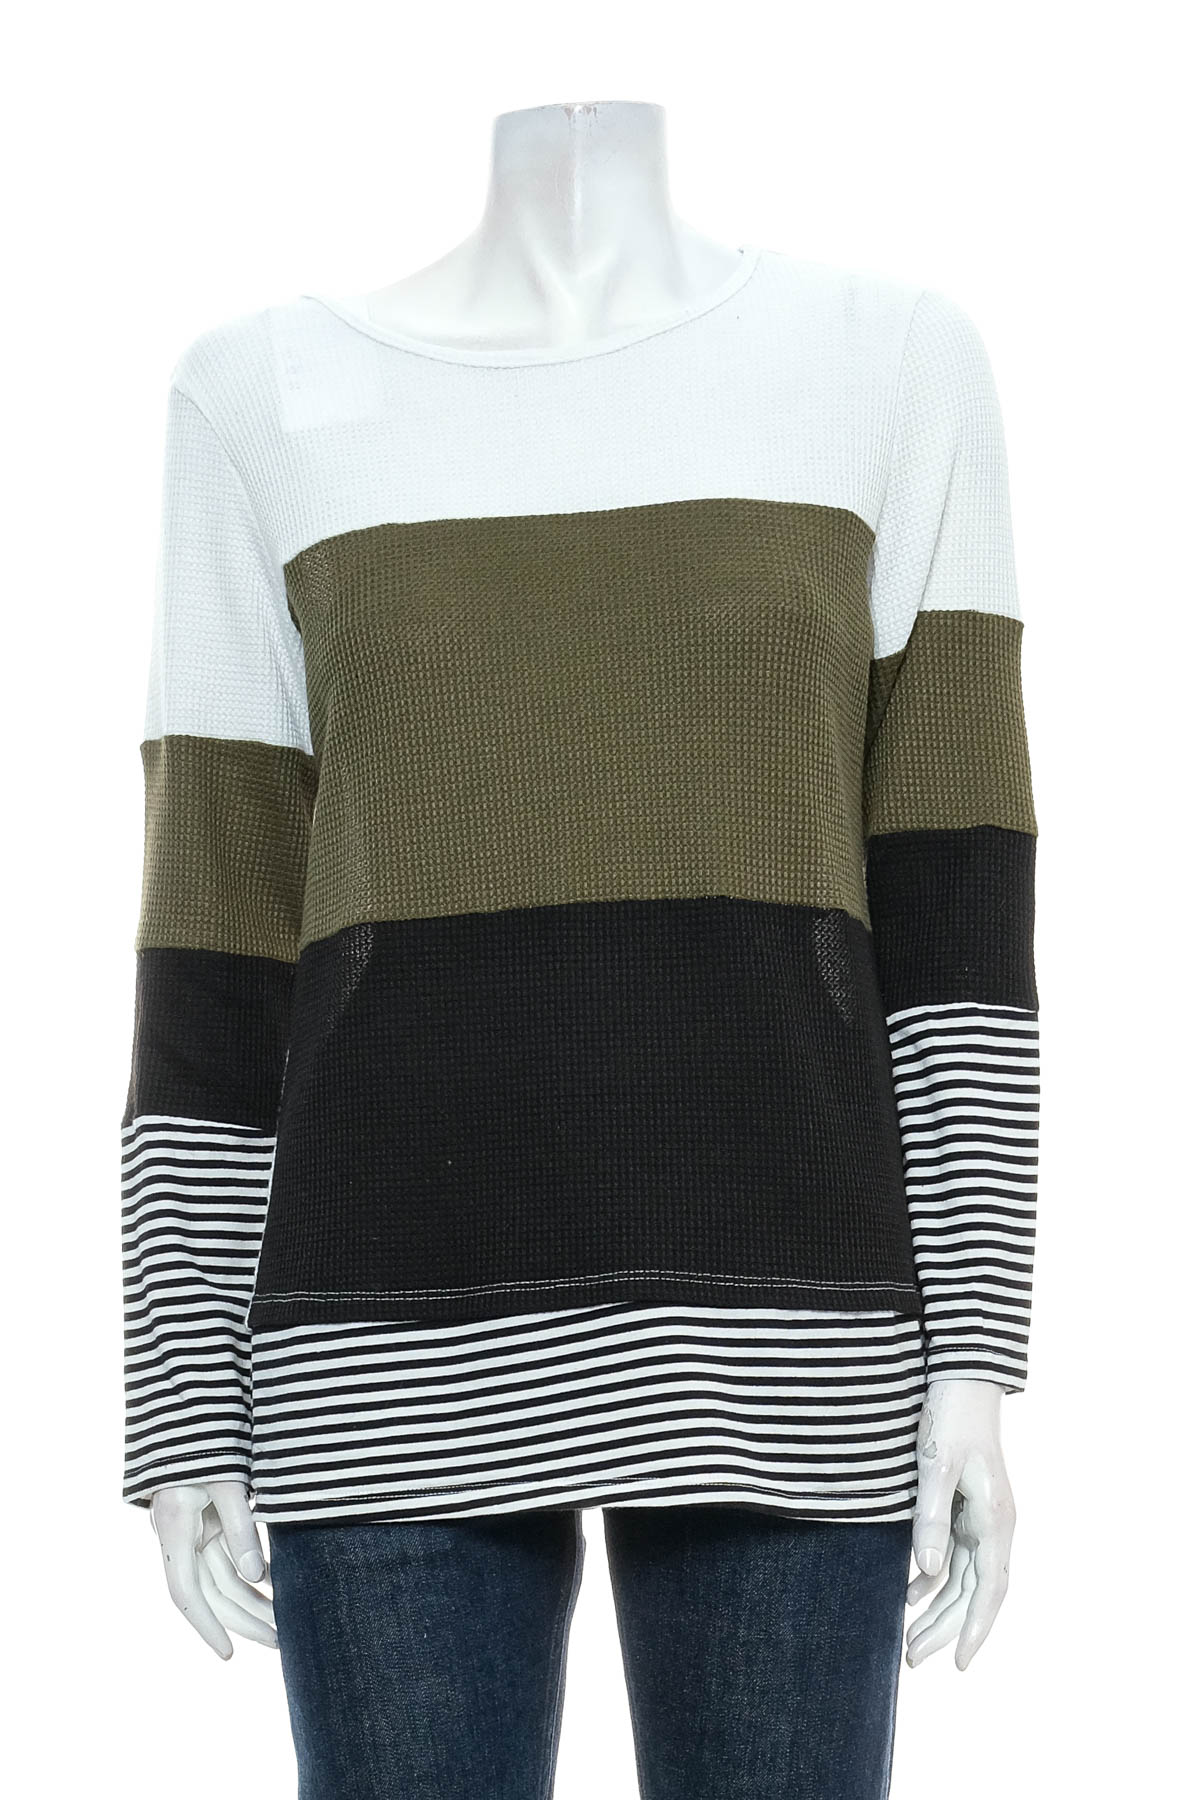 Women's sweater - SHEIN - 0